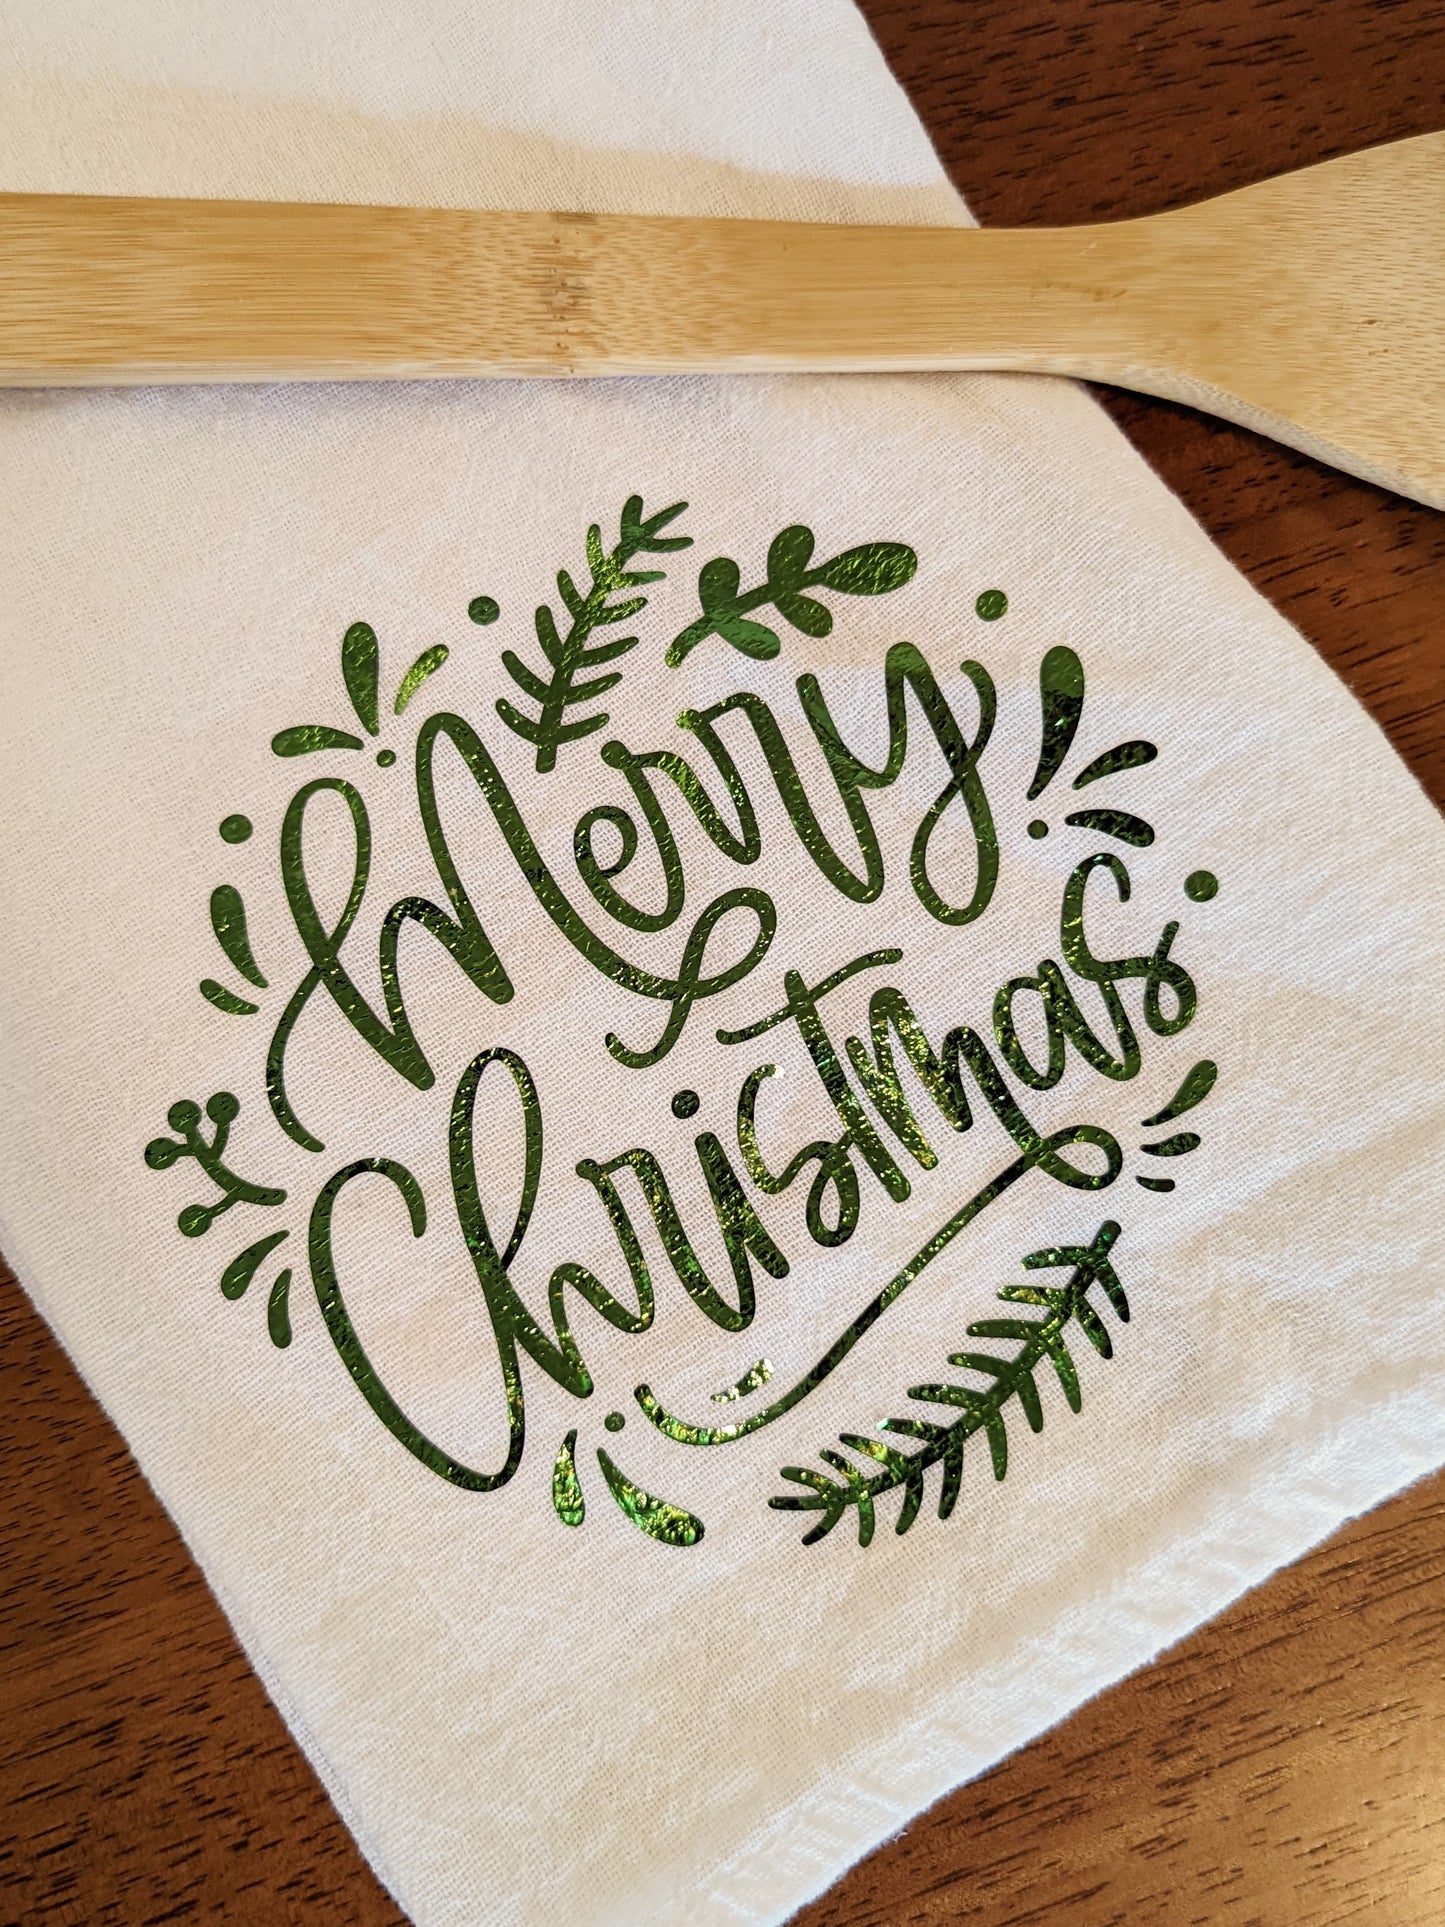 Merry Christmas Dish Towel